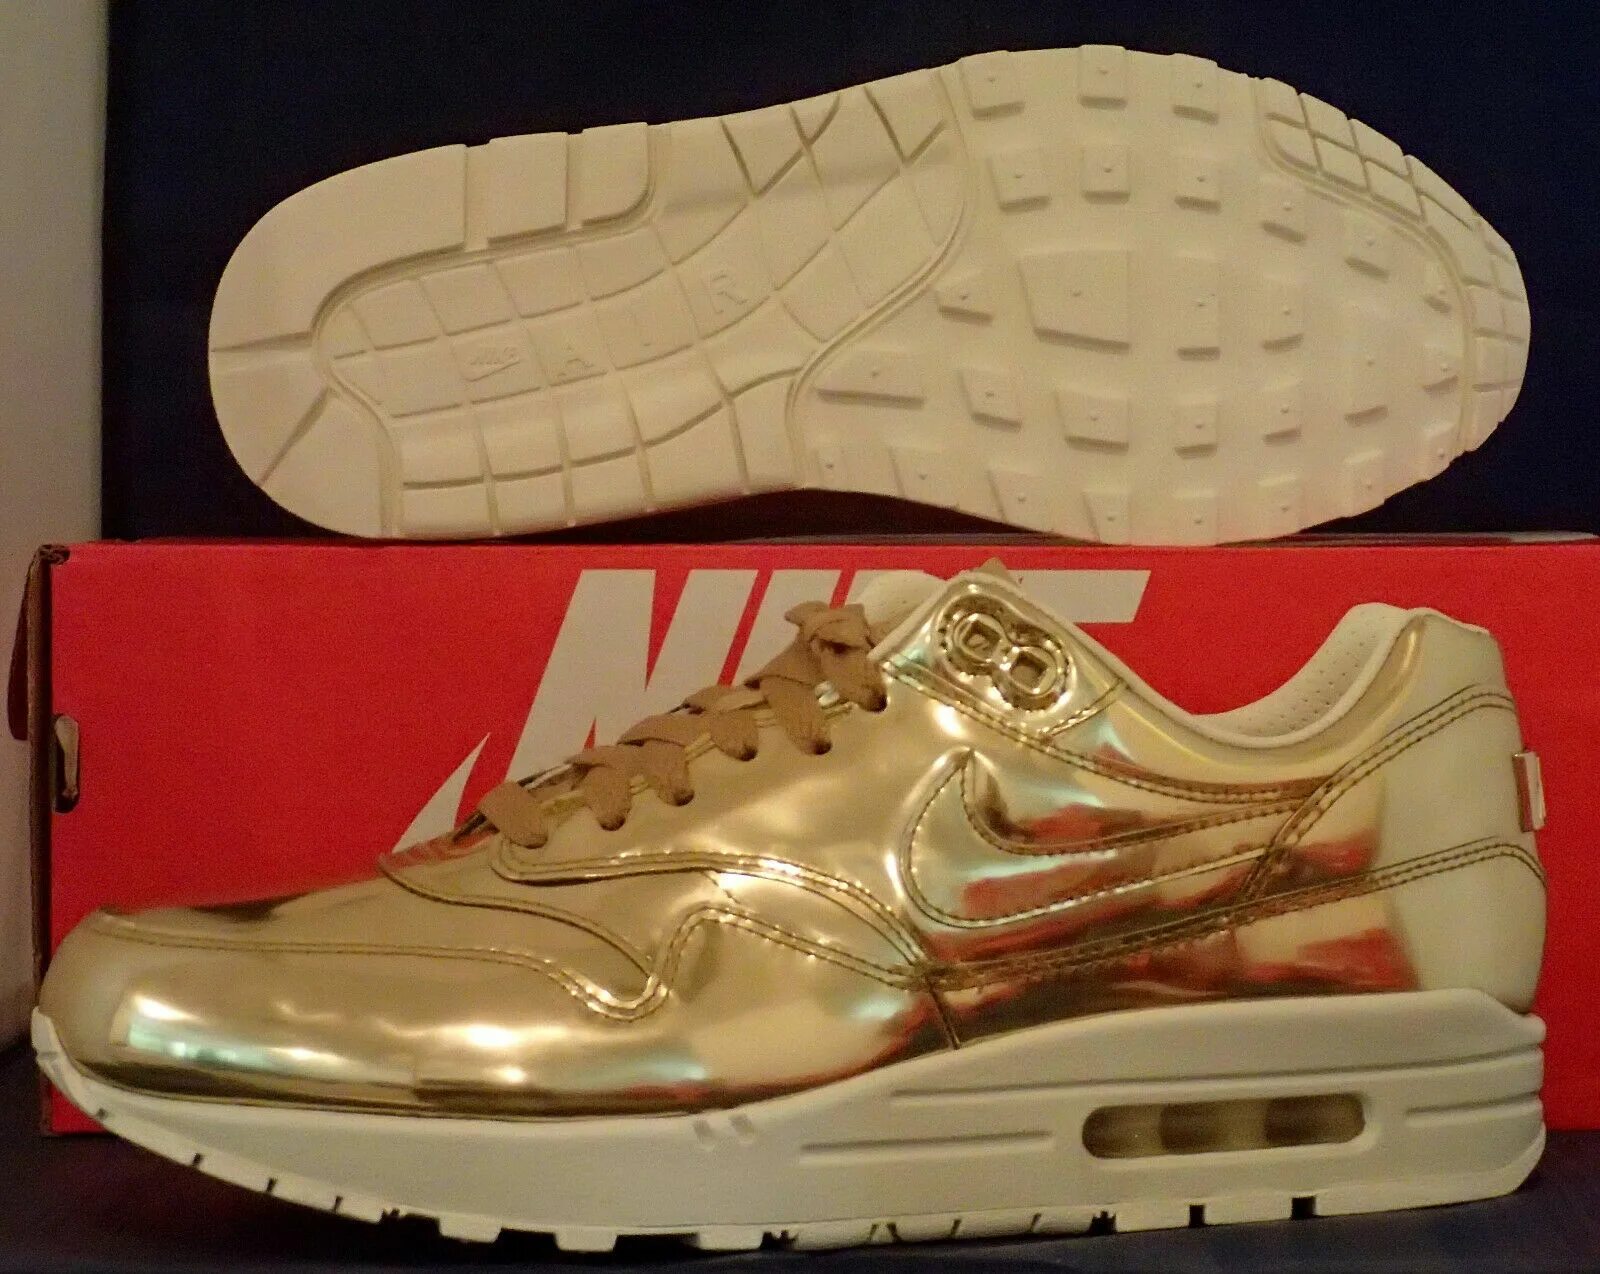 Nike gold